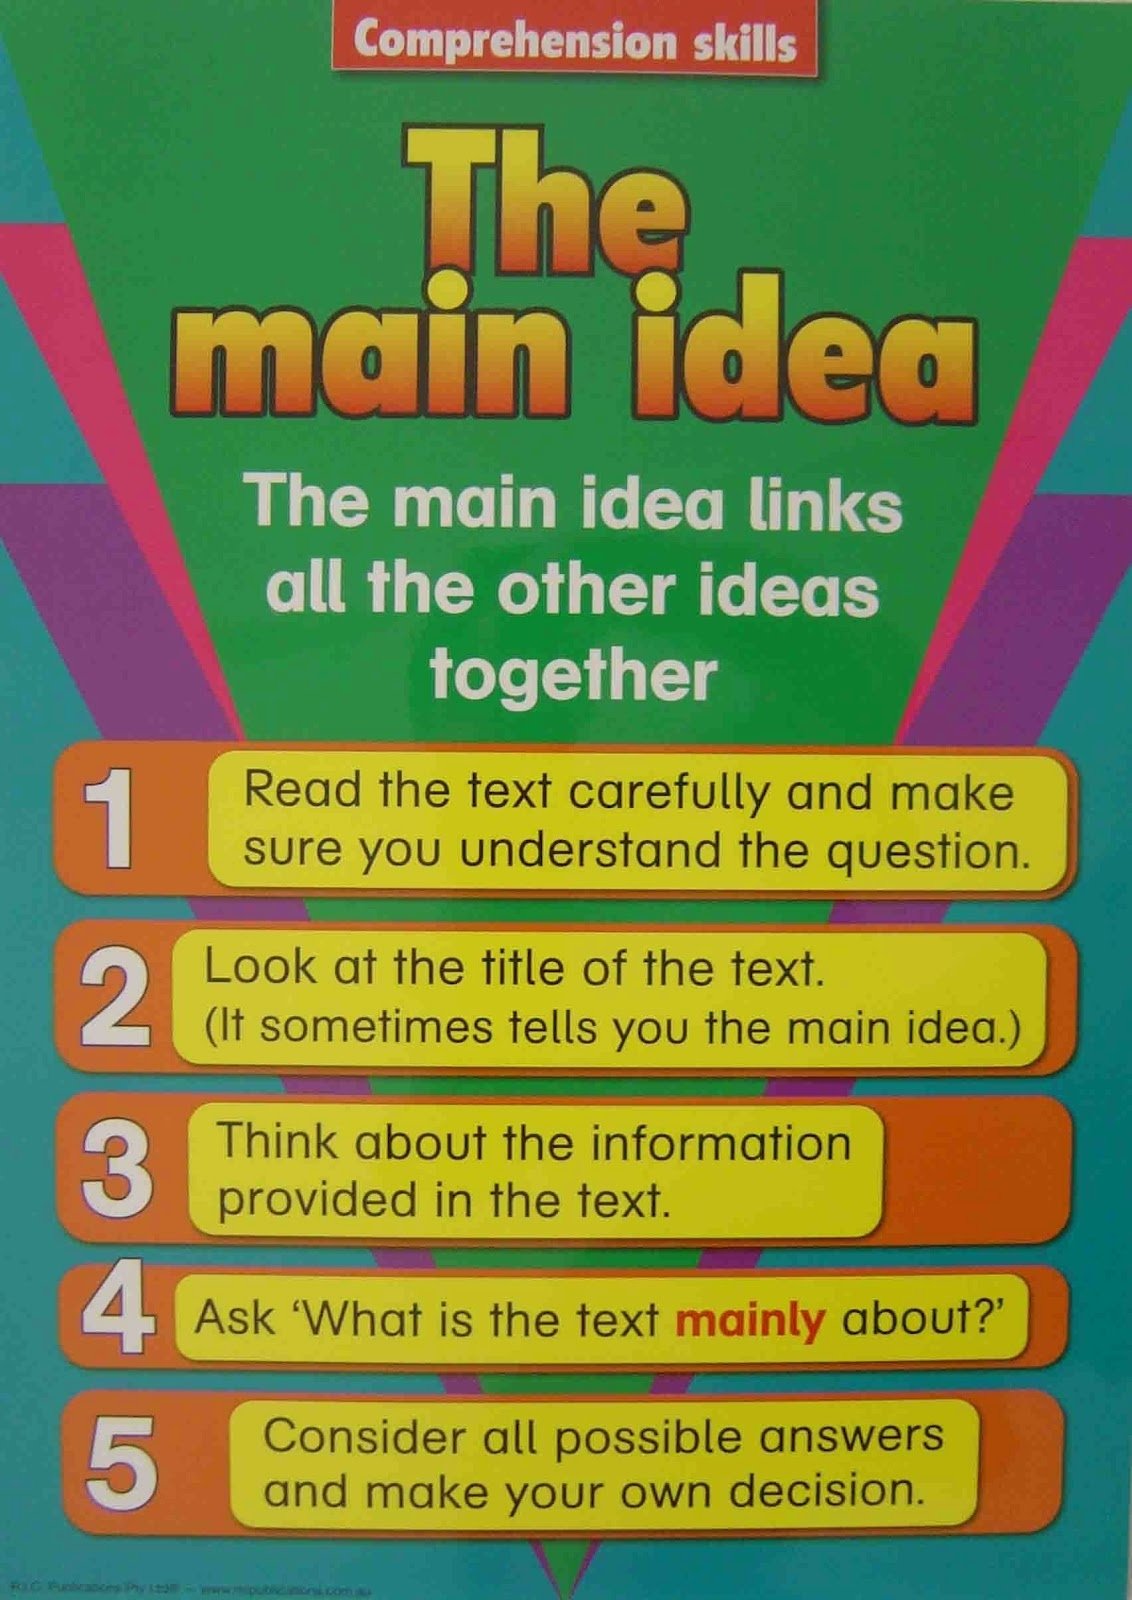 10 Unique Finding The Main Idea Powerpoint main idea lessons tes teach 5 2022